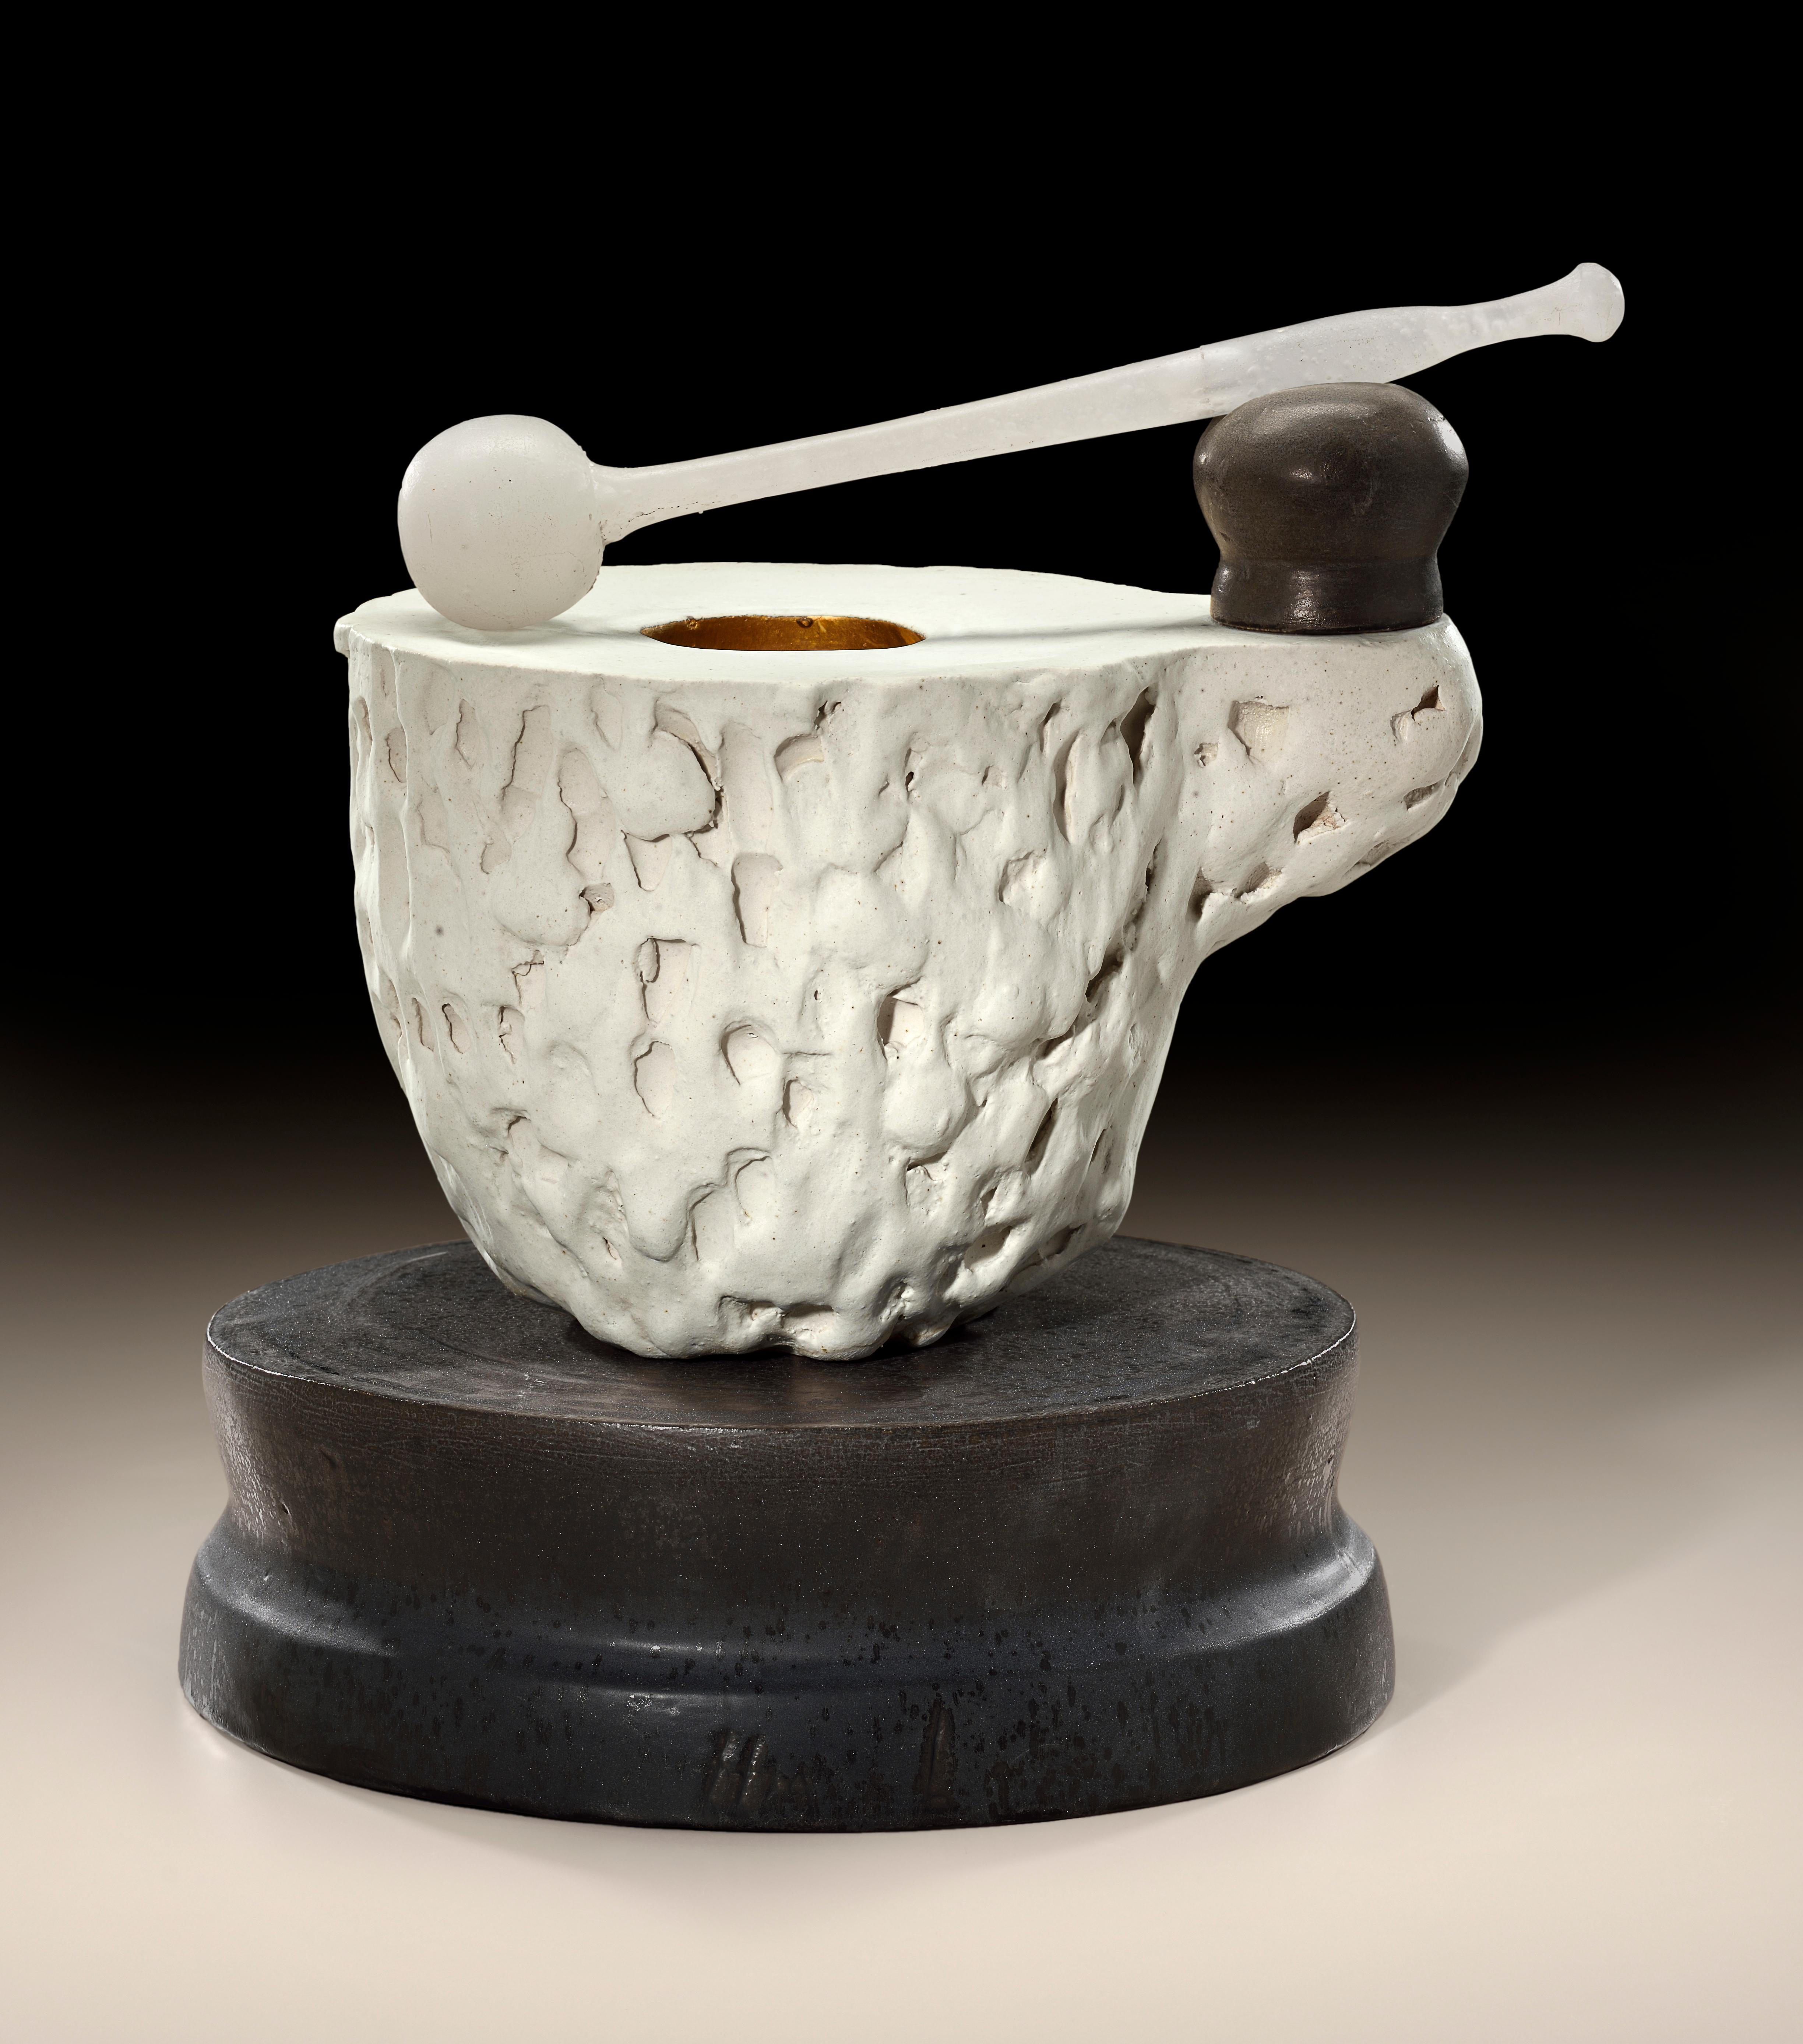 Richard Hirsch Ceramic Mortar and Glass Pestle Sculpture #1, 2020 For Sale 2